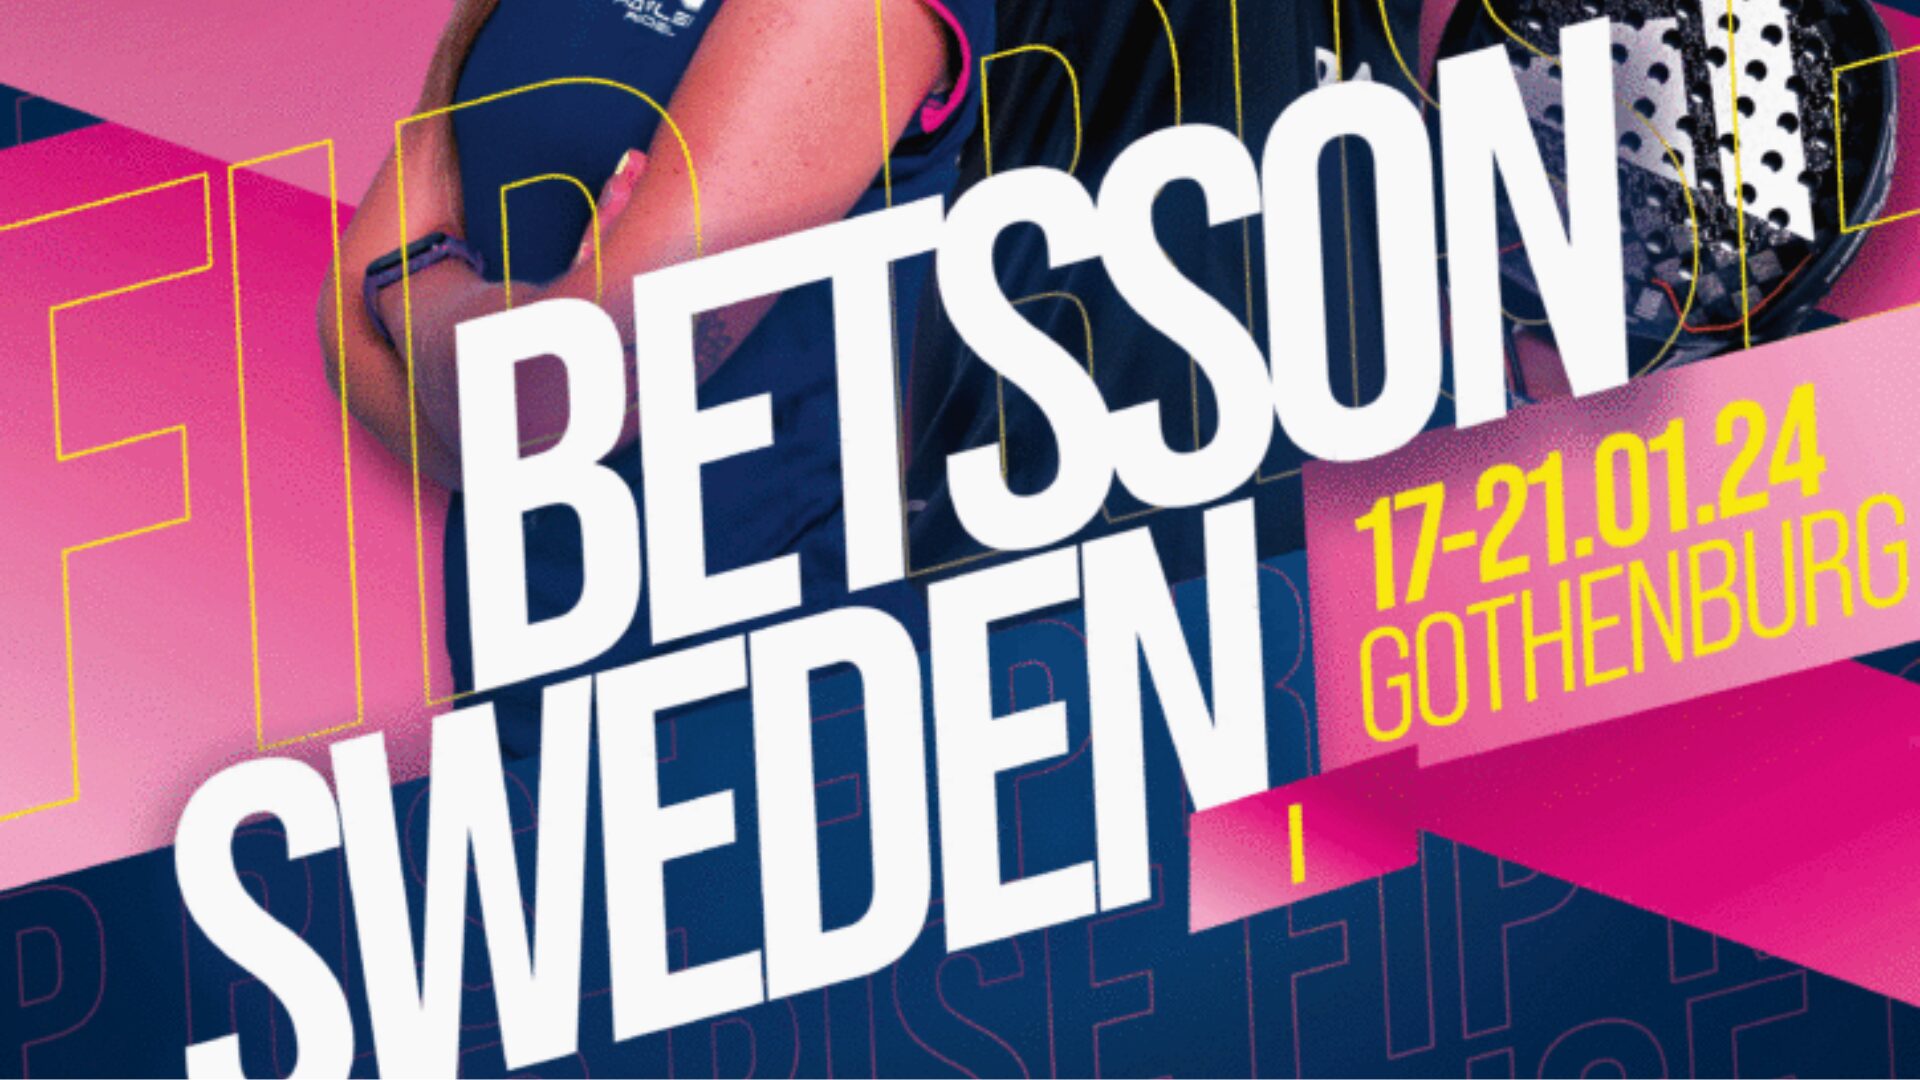 Betsson Sweden FIP Rise tammikuu 2024 Göteborg